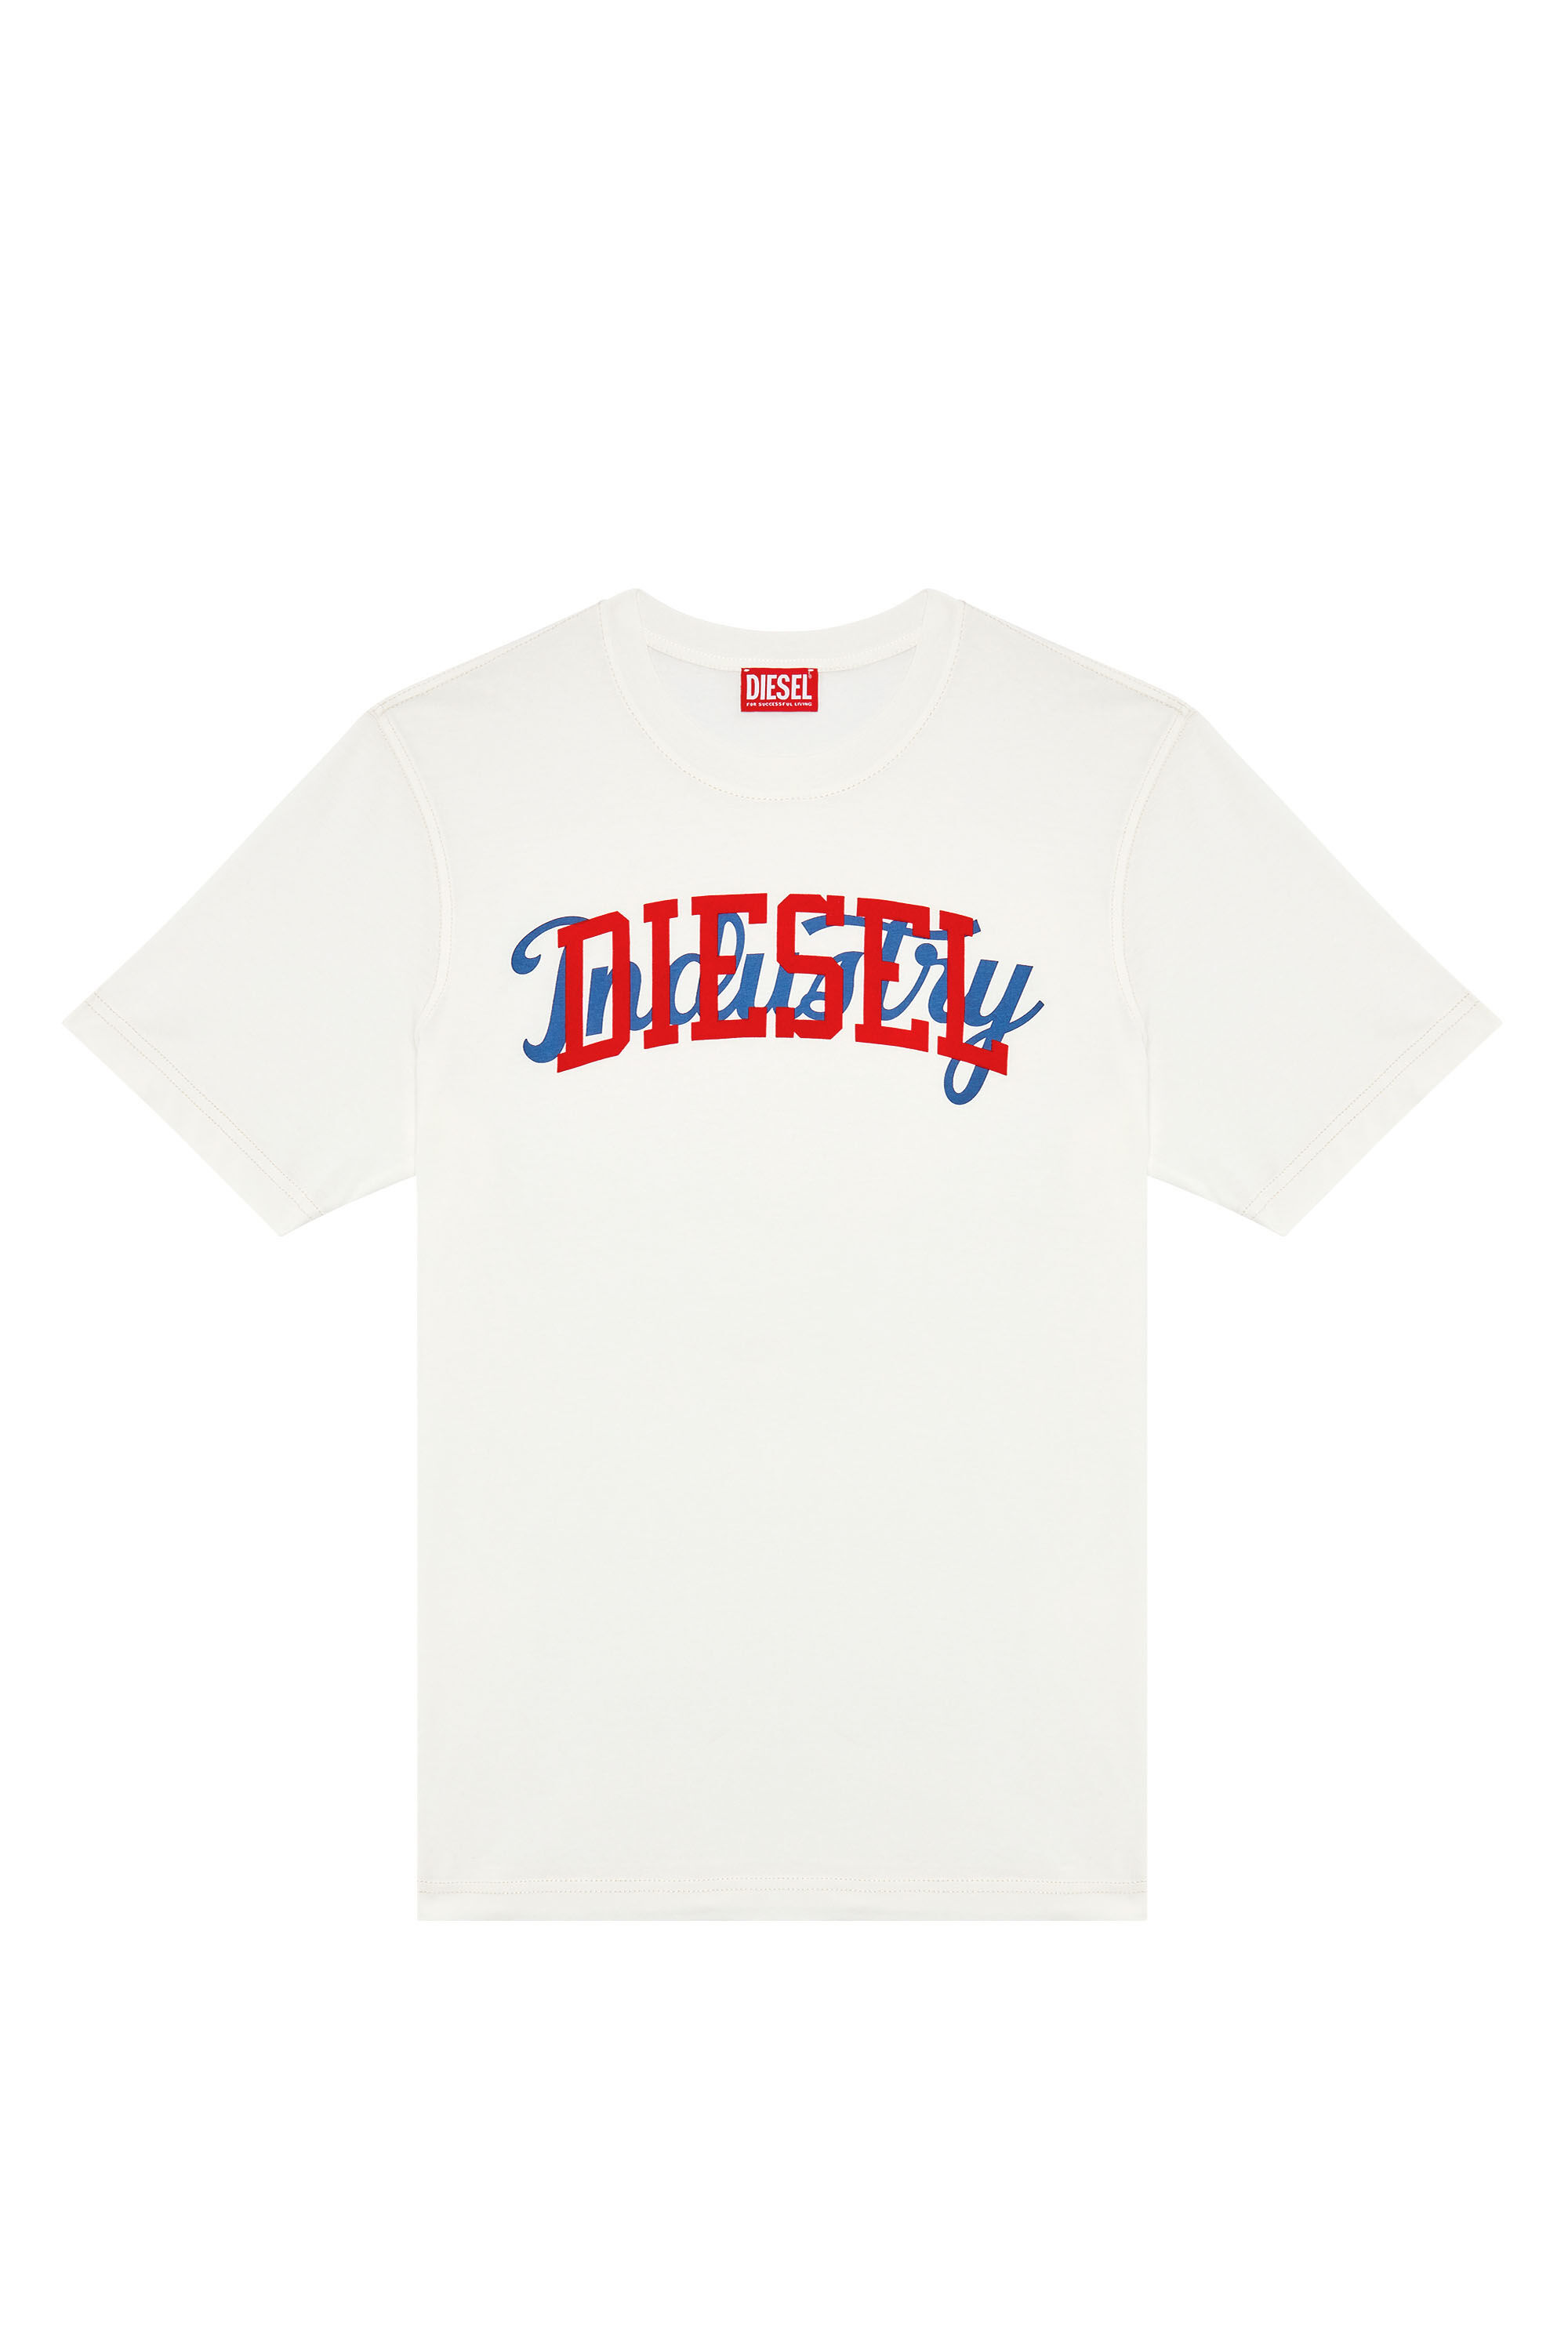 Diesel - T-JUST-N10, Man T-shirt with contrasting Diesel prints in White - Image 2